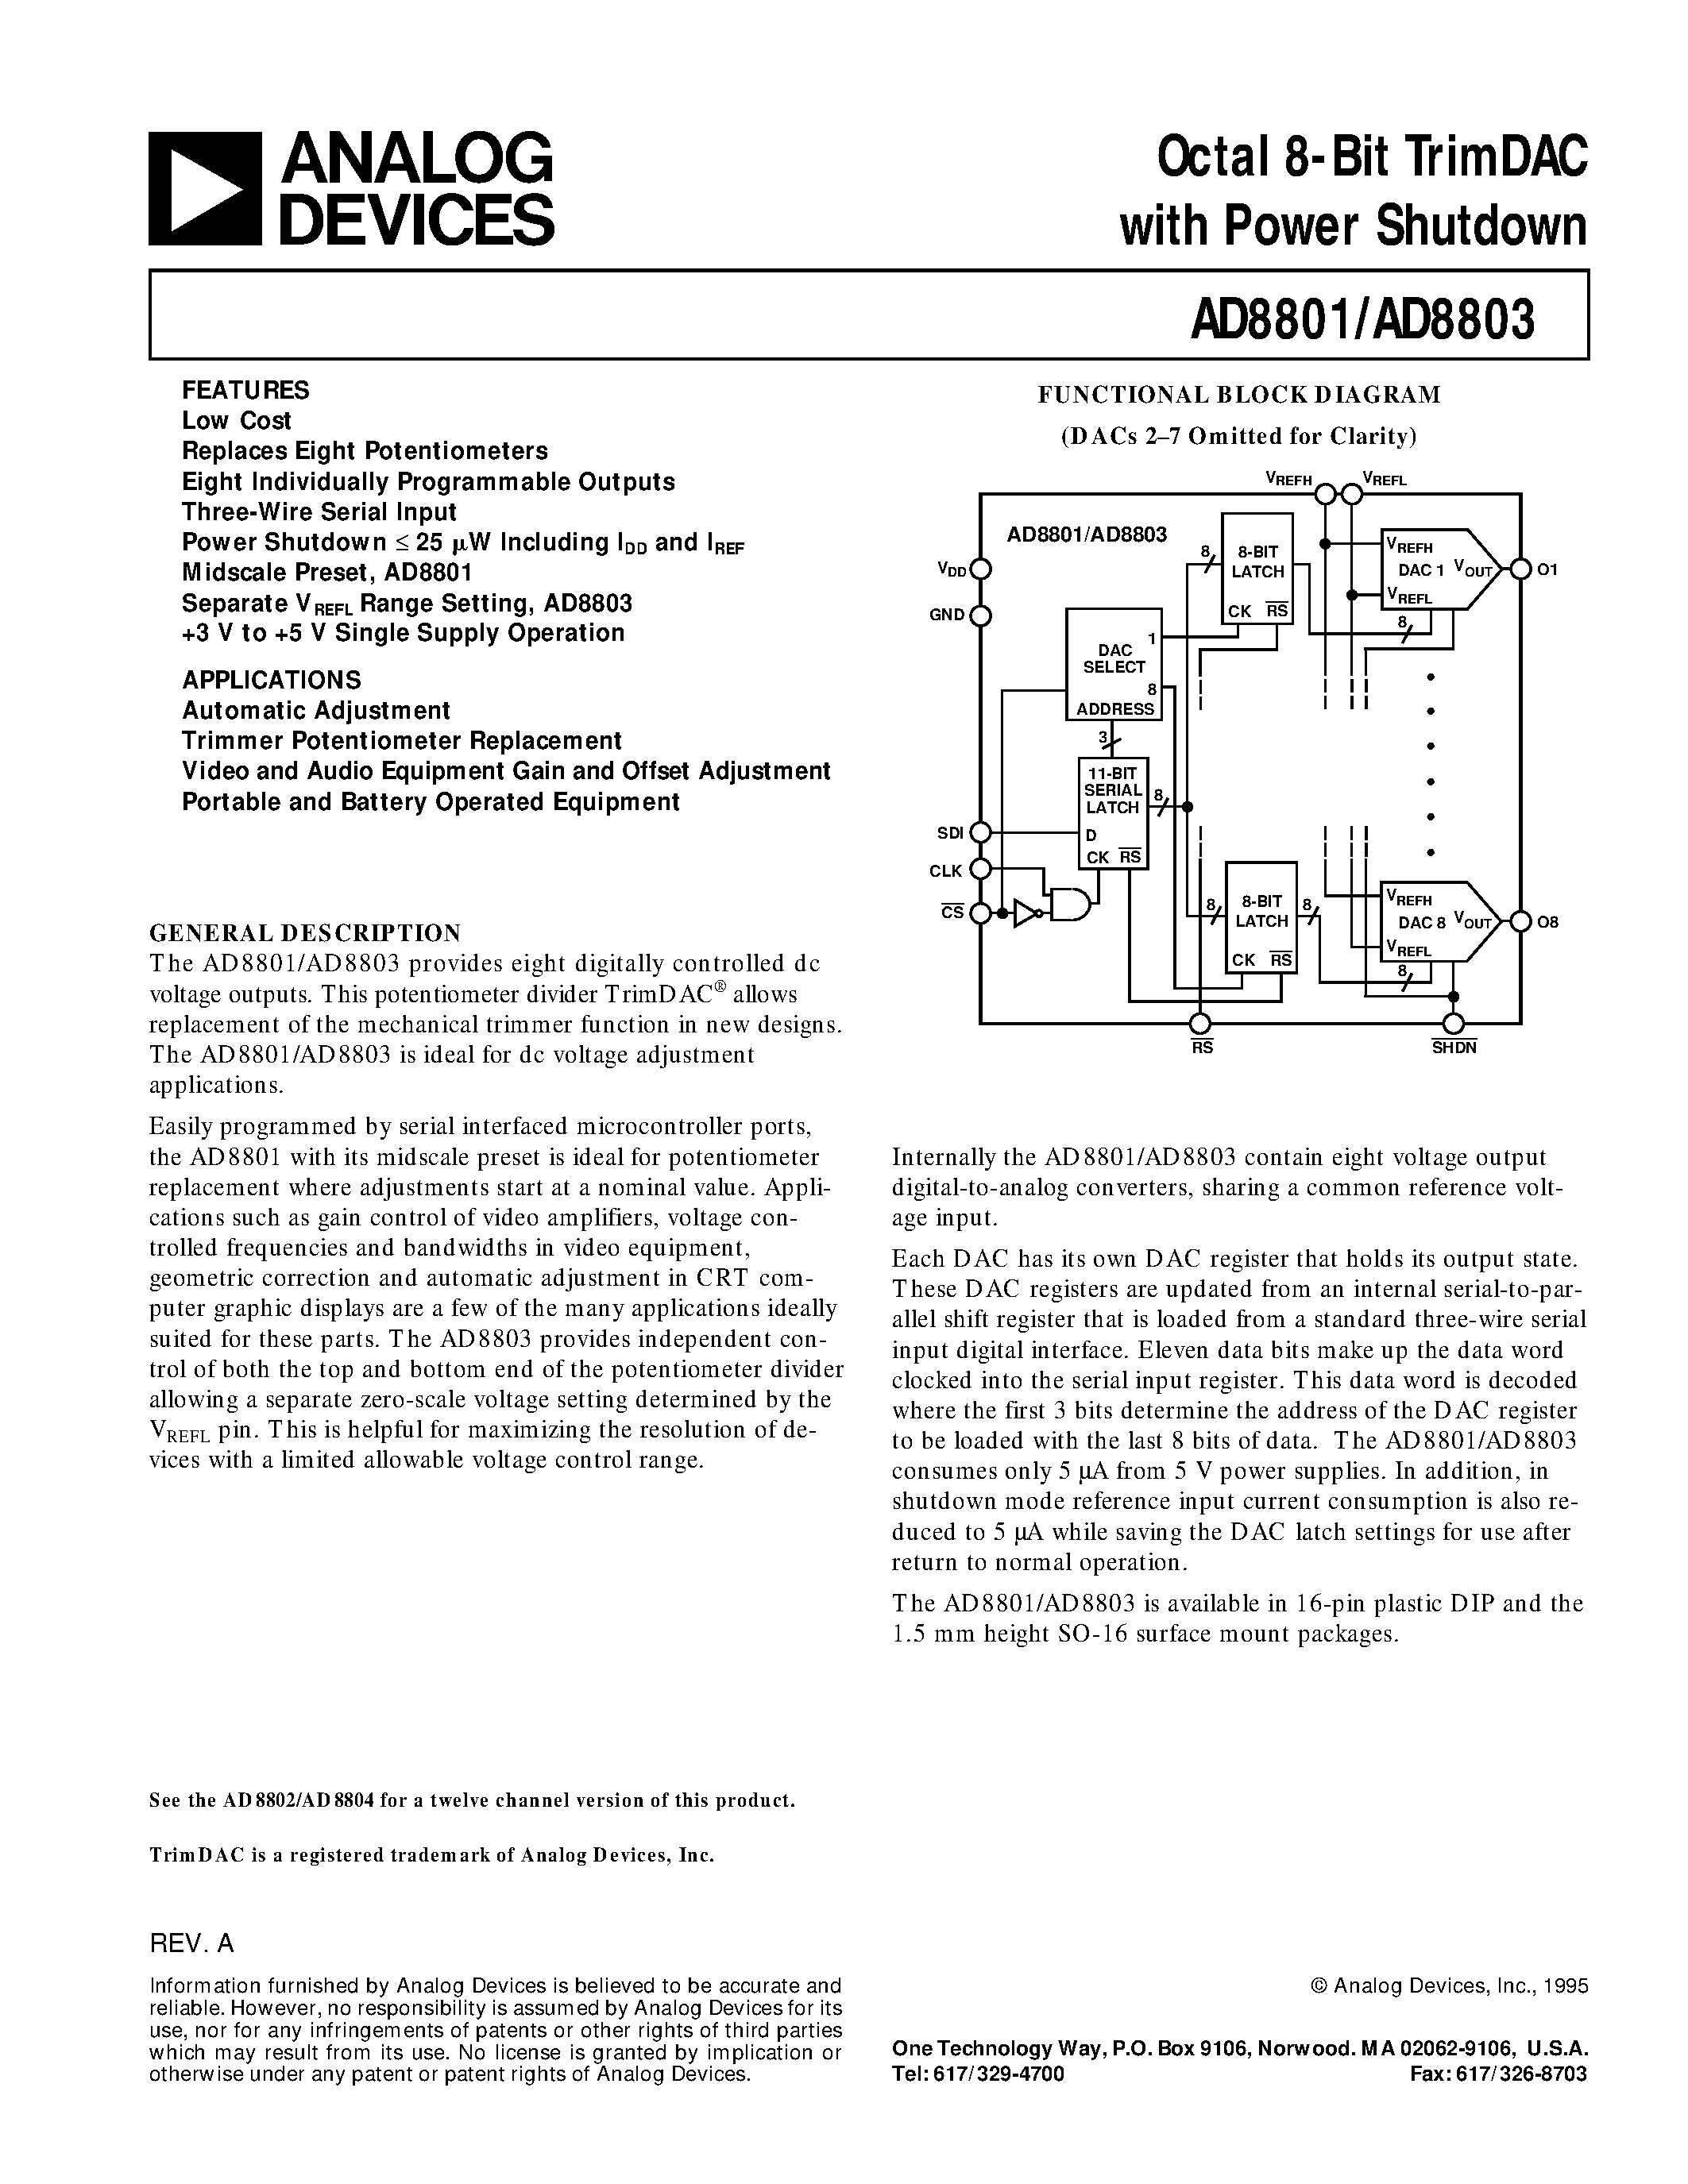 Даташит AD8803AR - Octal 8-Bit TrimDAC with Power Shutdown страница 1